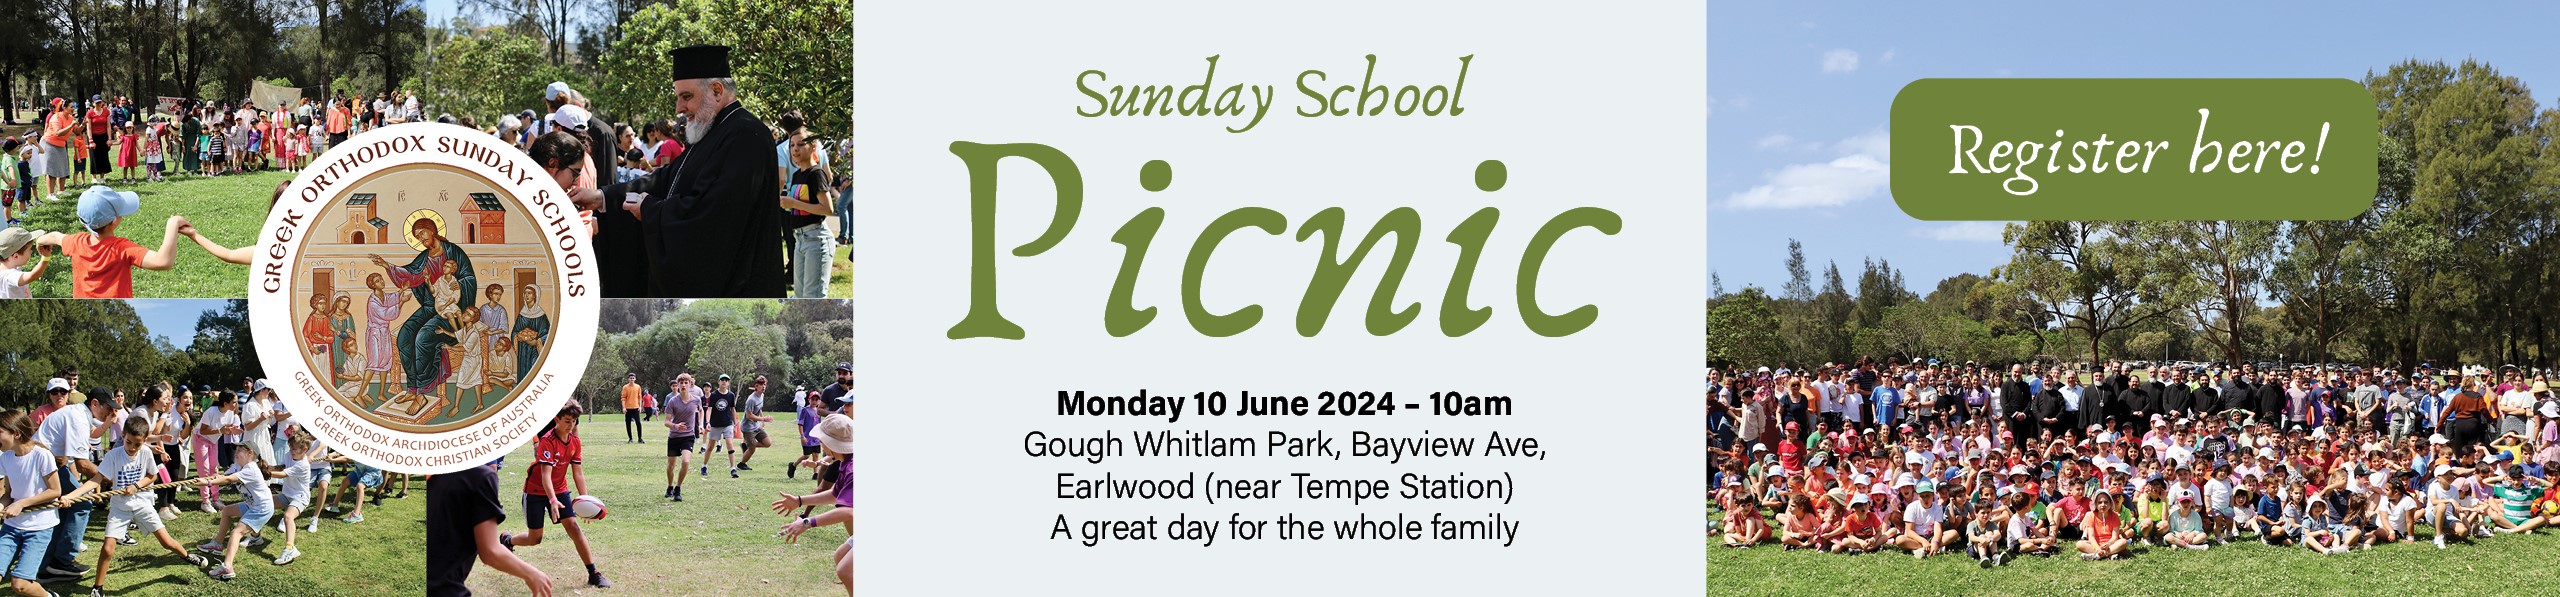 ss picnic banner 2024